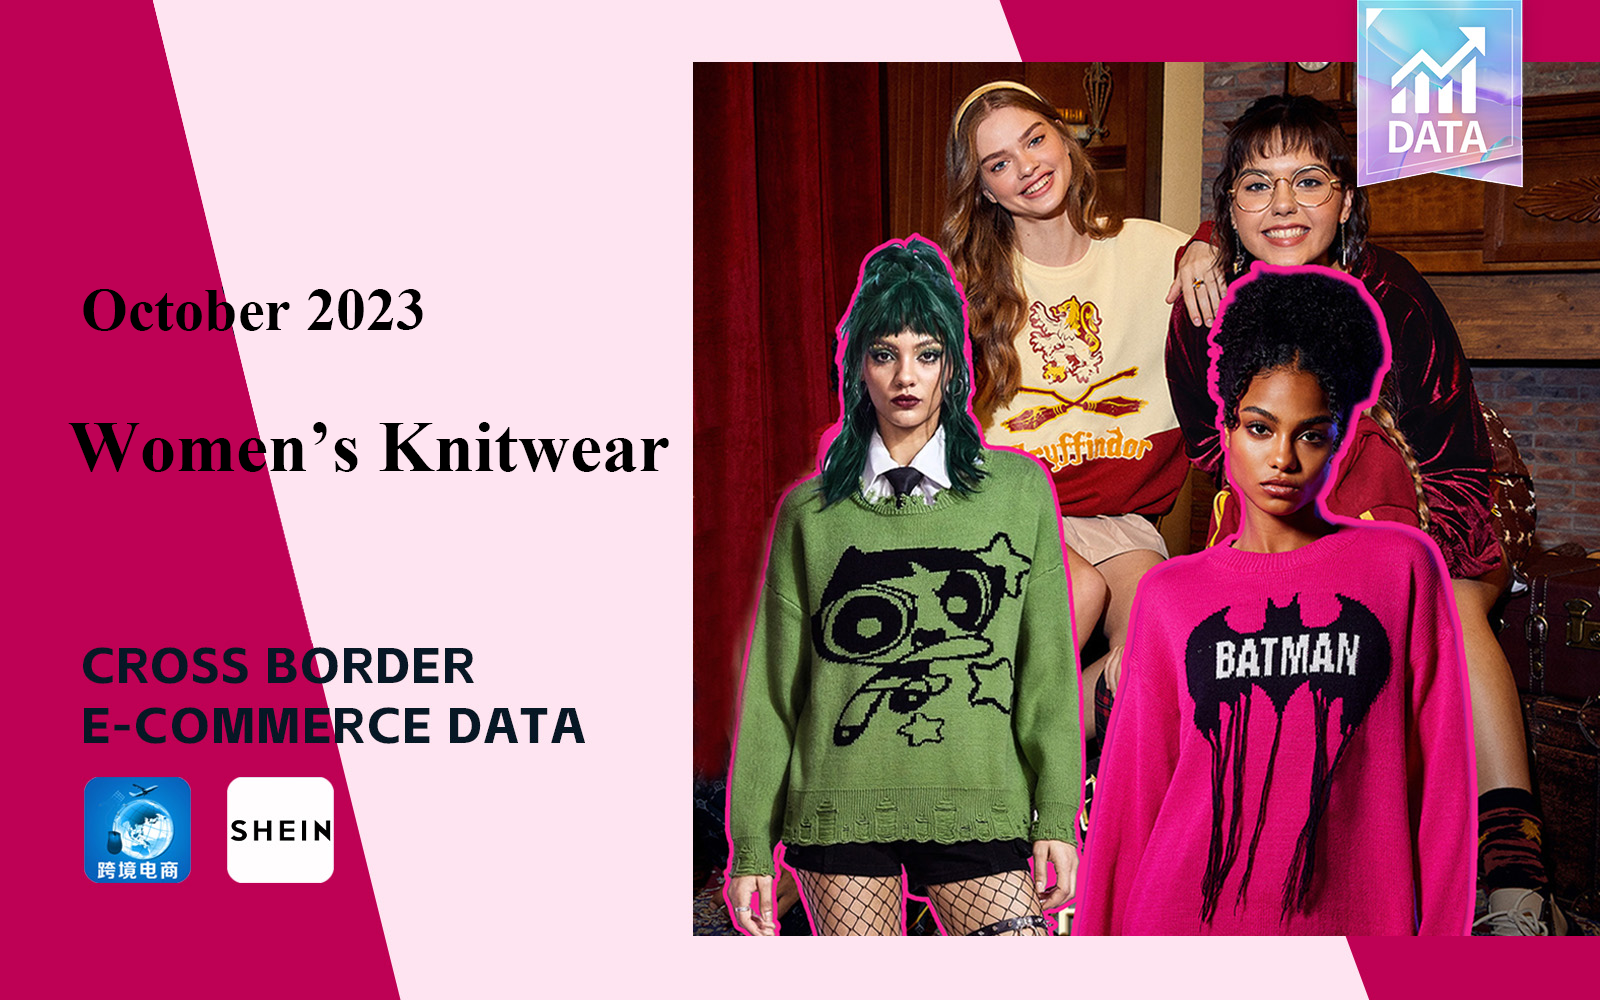 Women's Knitwear -- The E-commerce Data Analysis of SHEIN